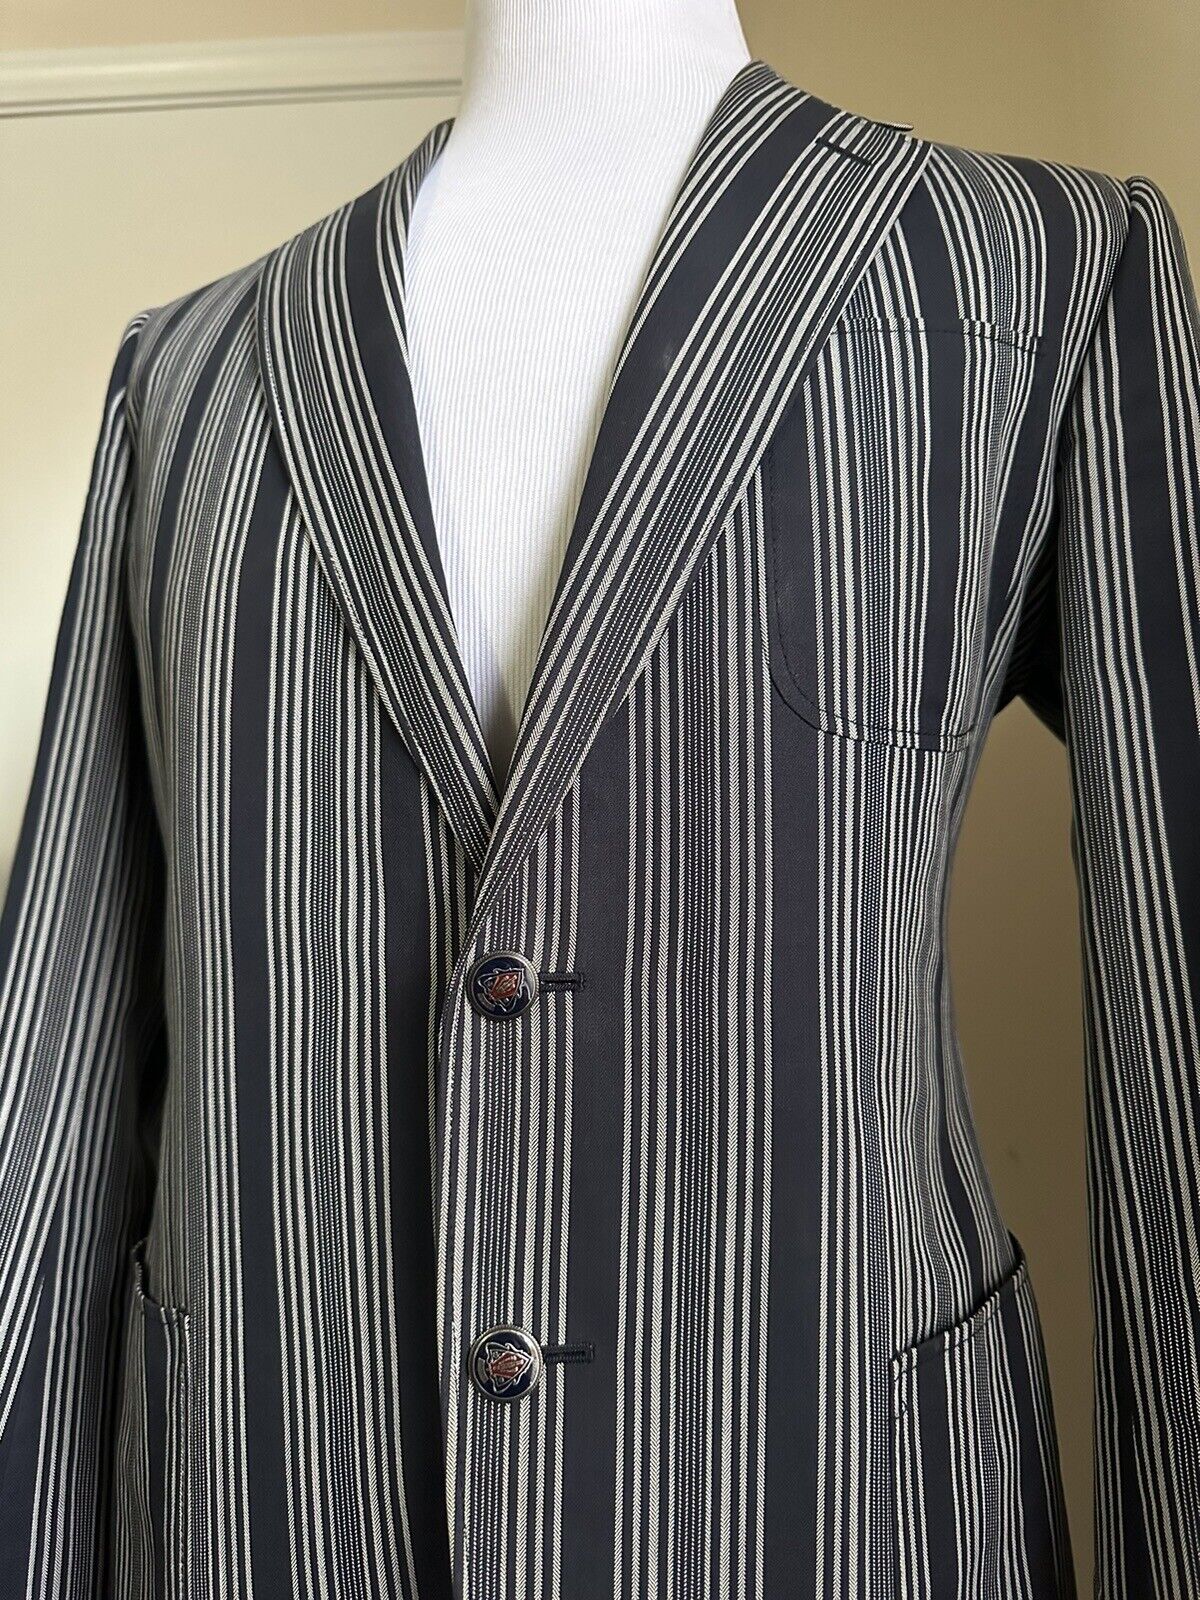 $2780 Gucci Tom Ford Men Iconic Sport Coat Blazer Navy/White 42R US/52R Eu